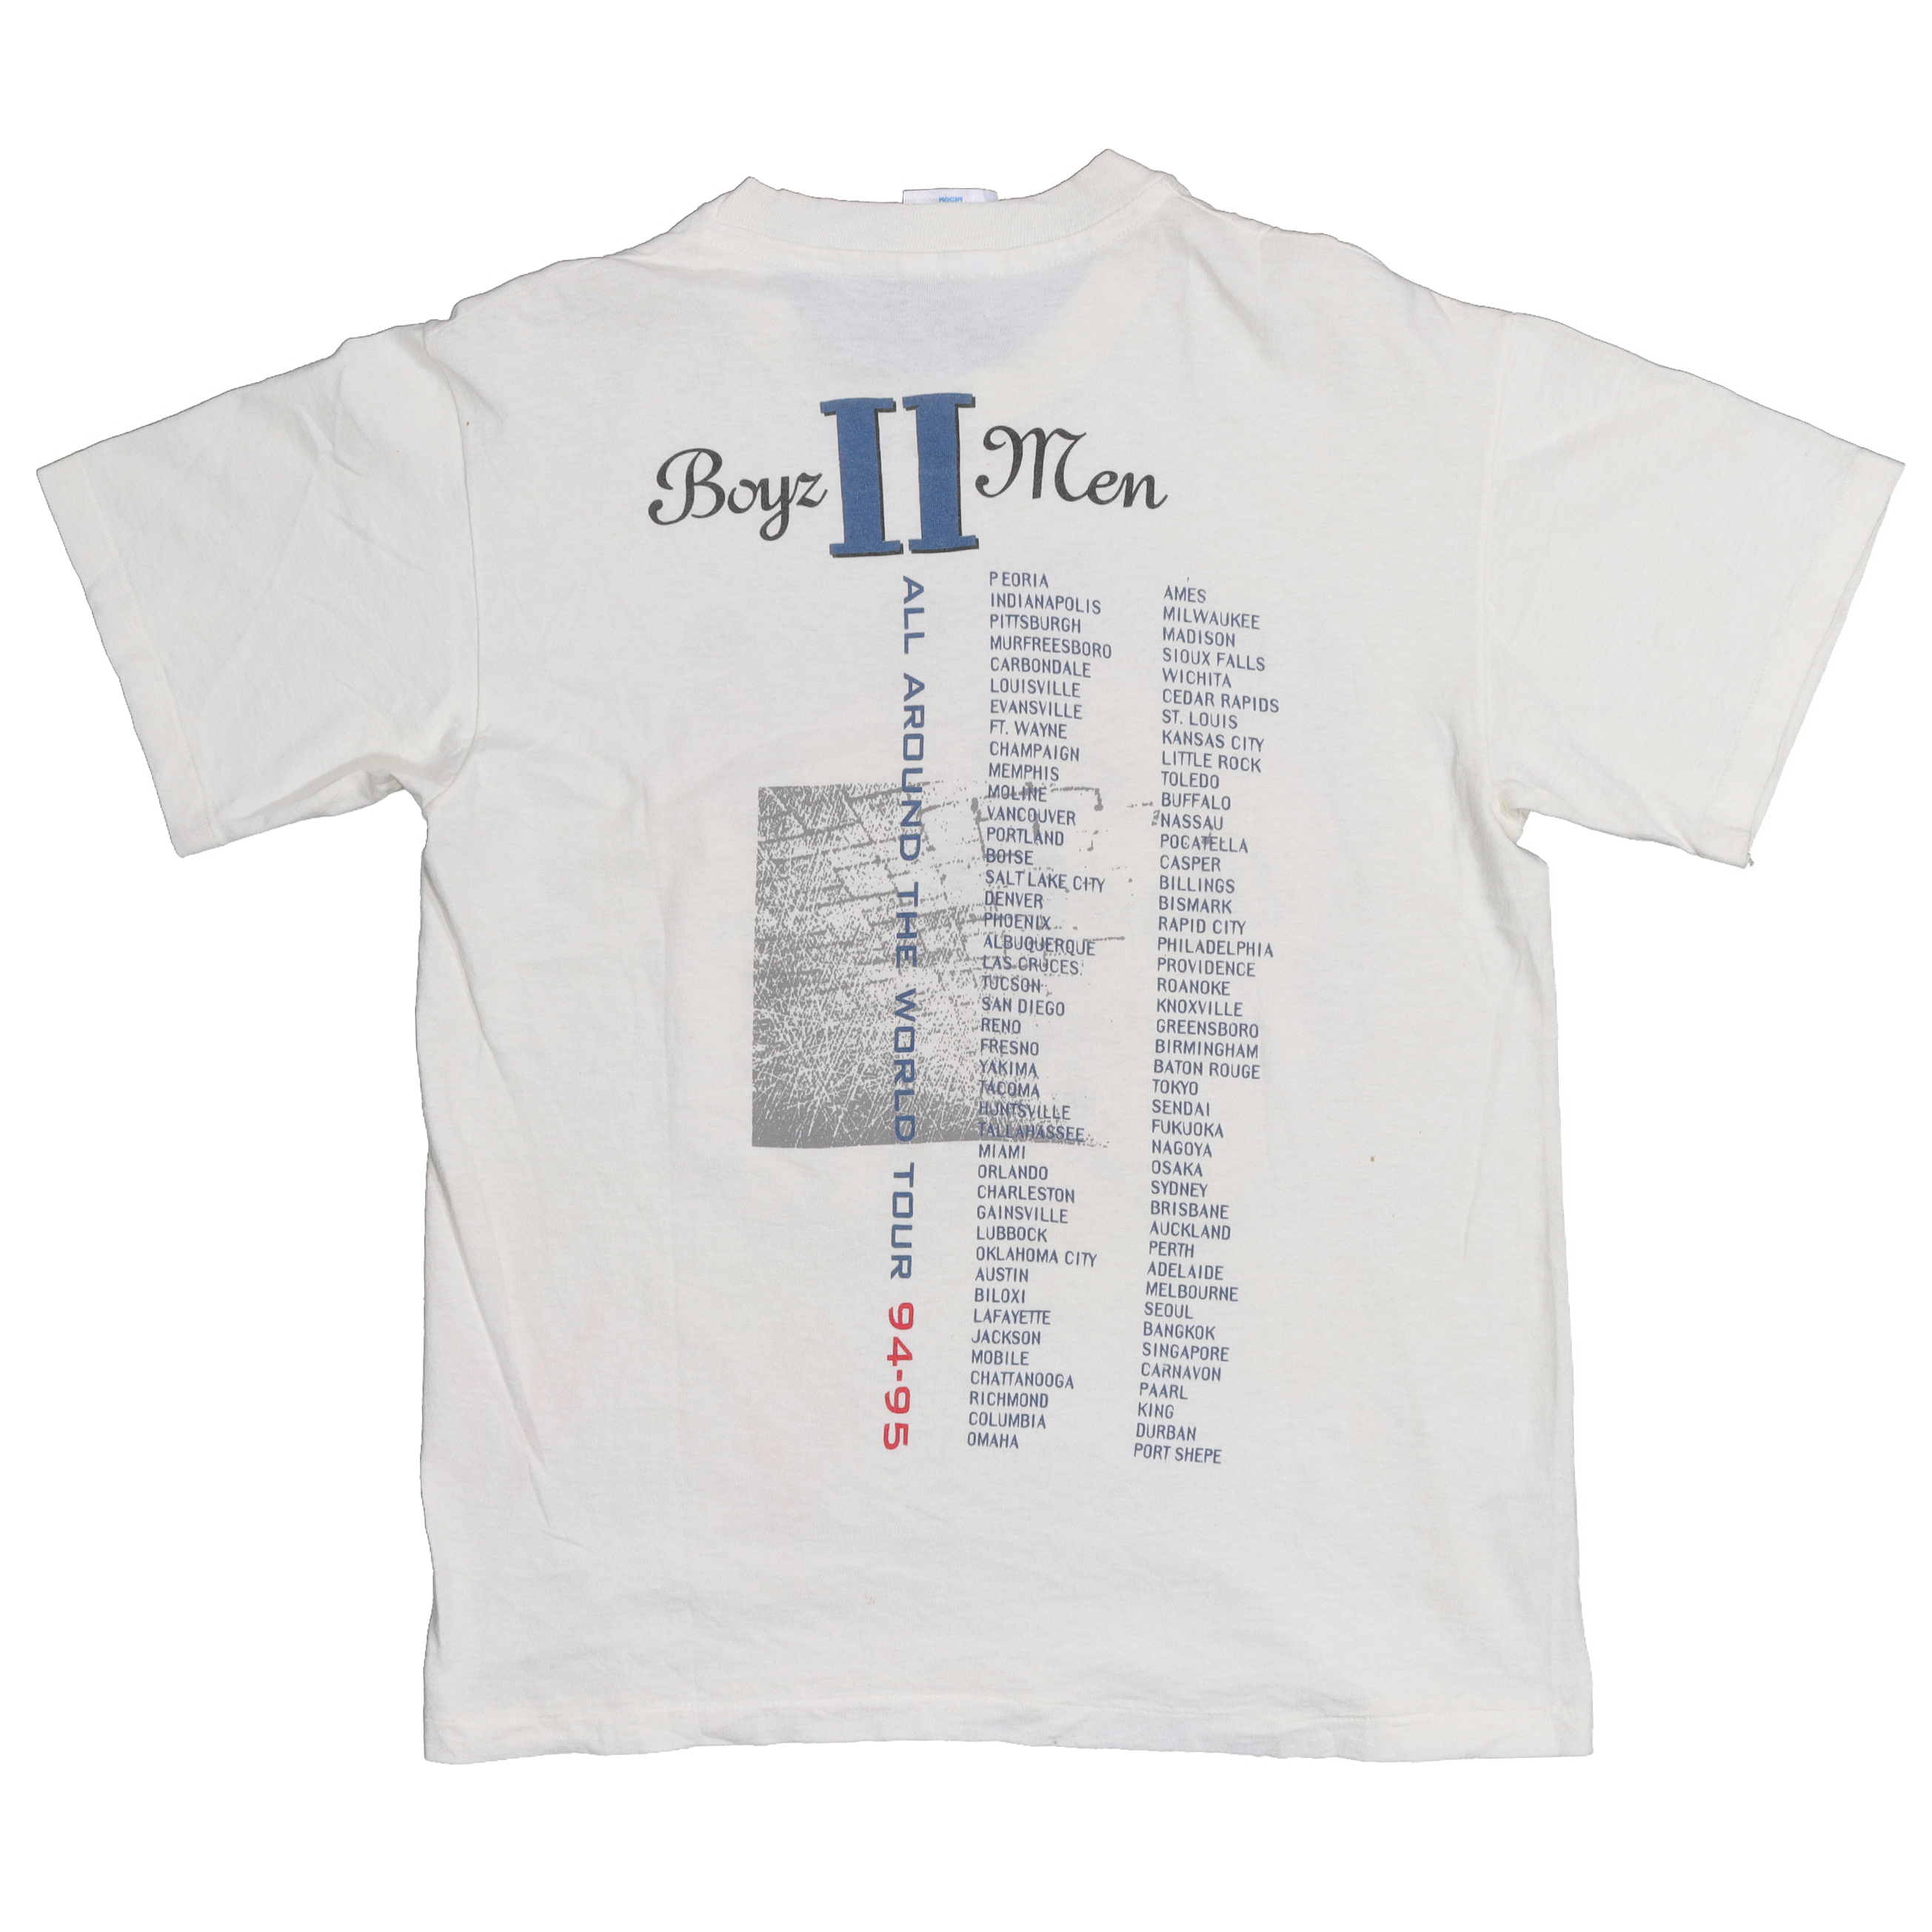 Boys II Men T-Shirt